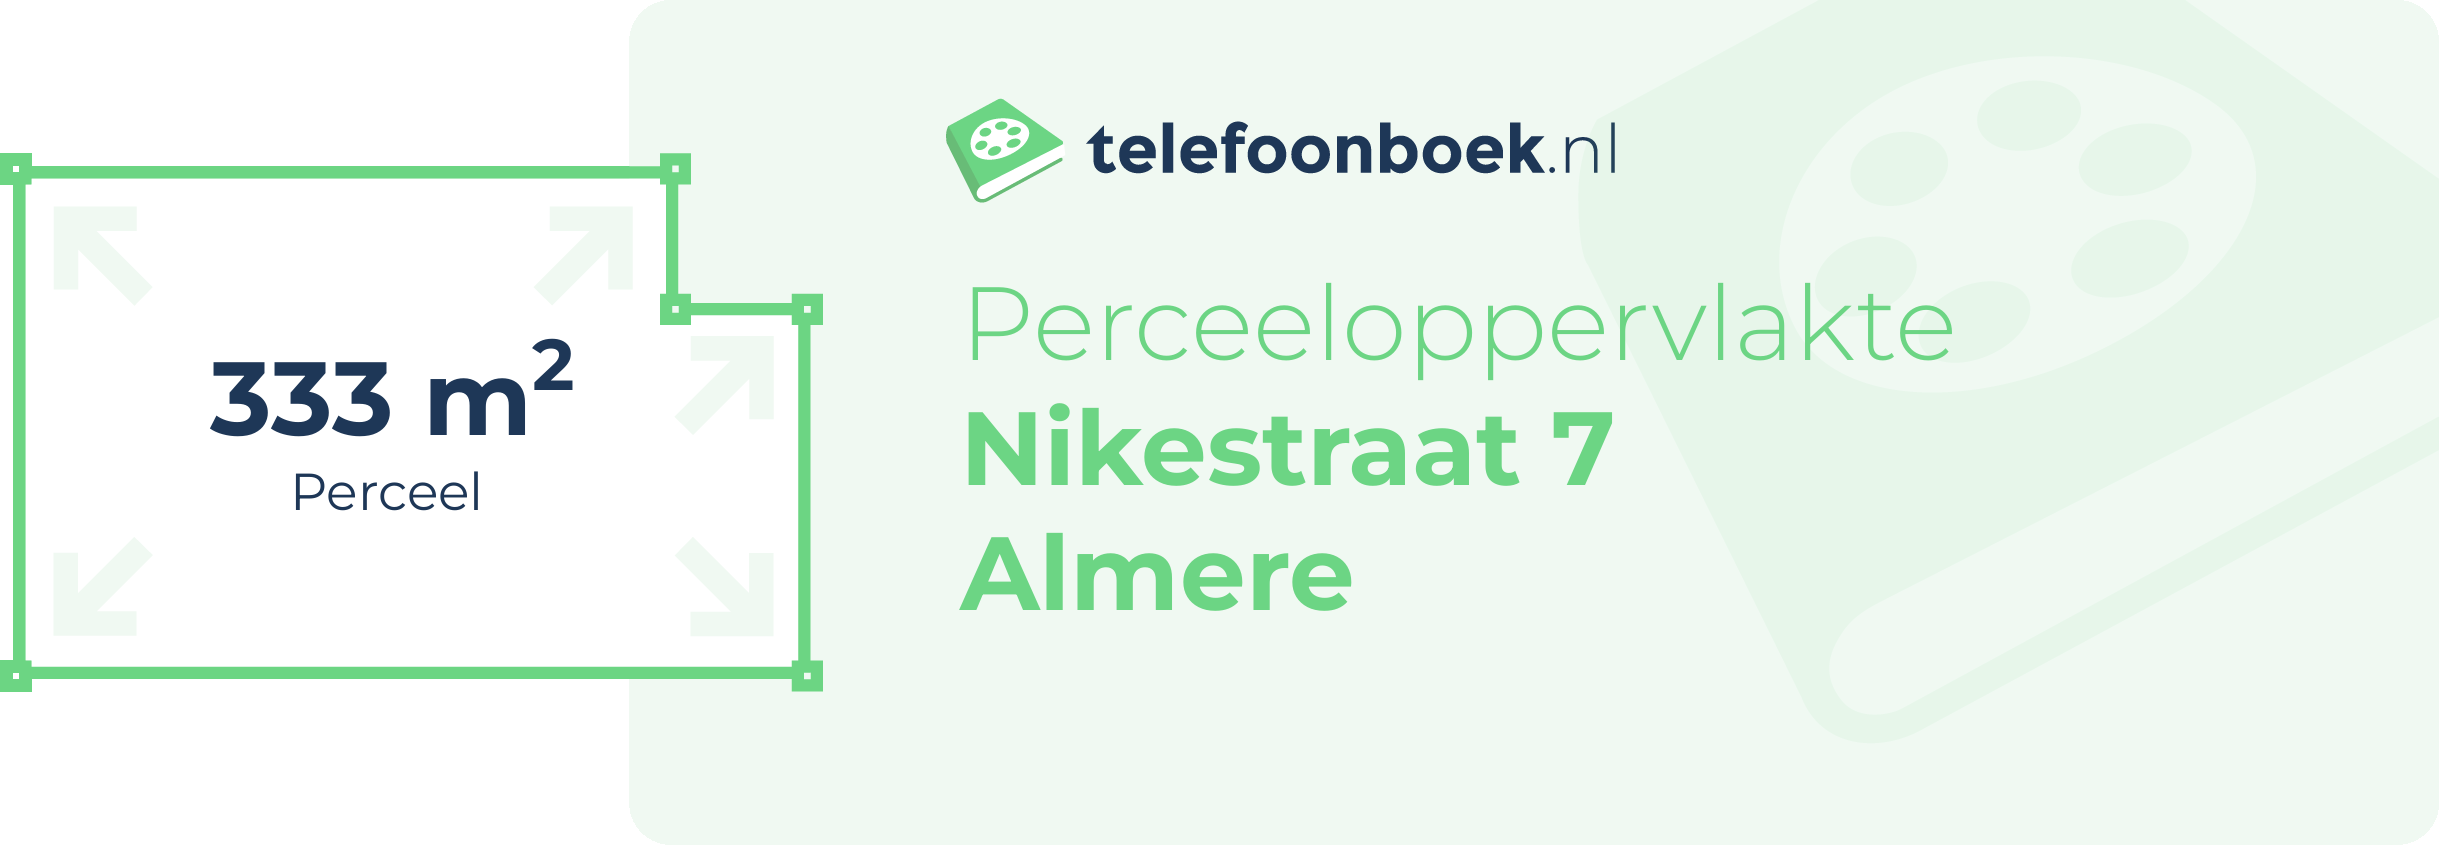 Perceeloppervlakte Nikestraat 7 Almere